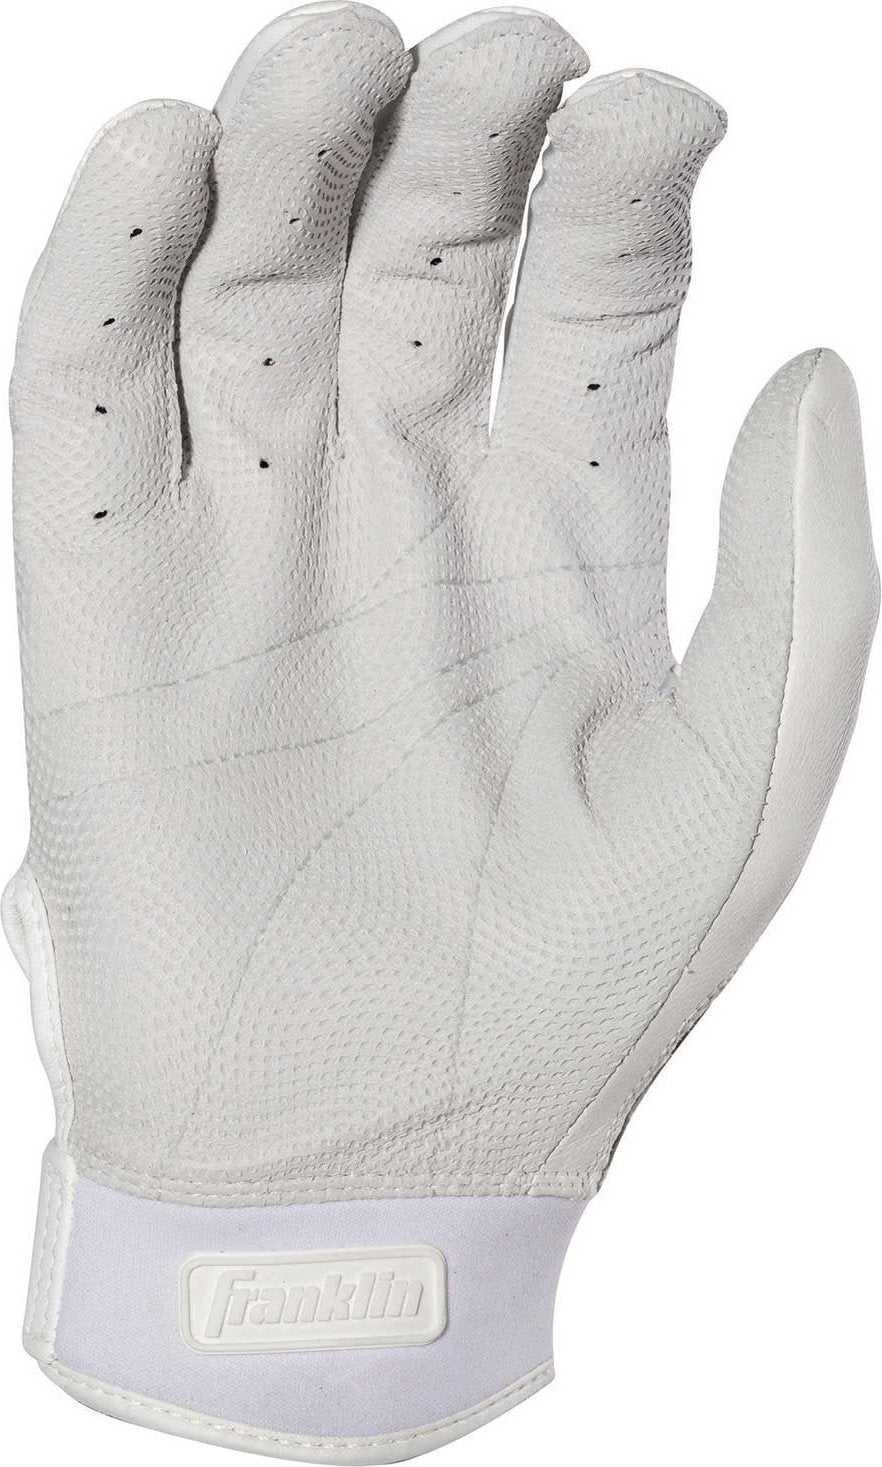 Franklin CFX Pro Chrome Adult Batting Gloves - White - HIT a Double